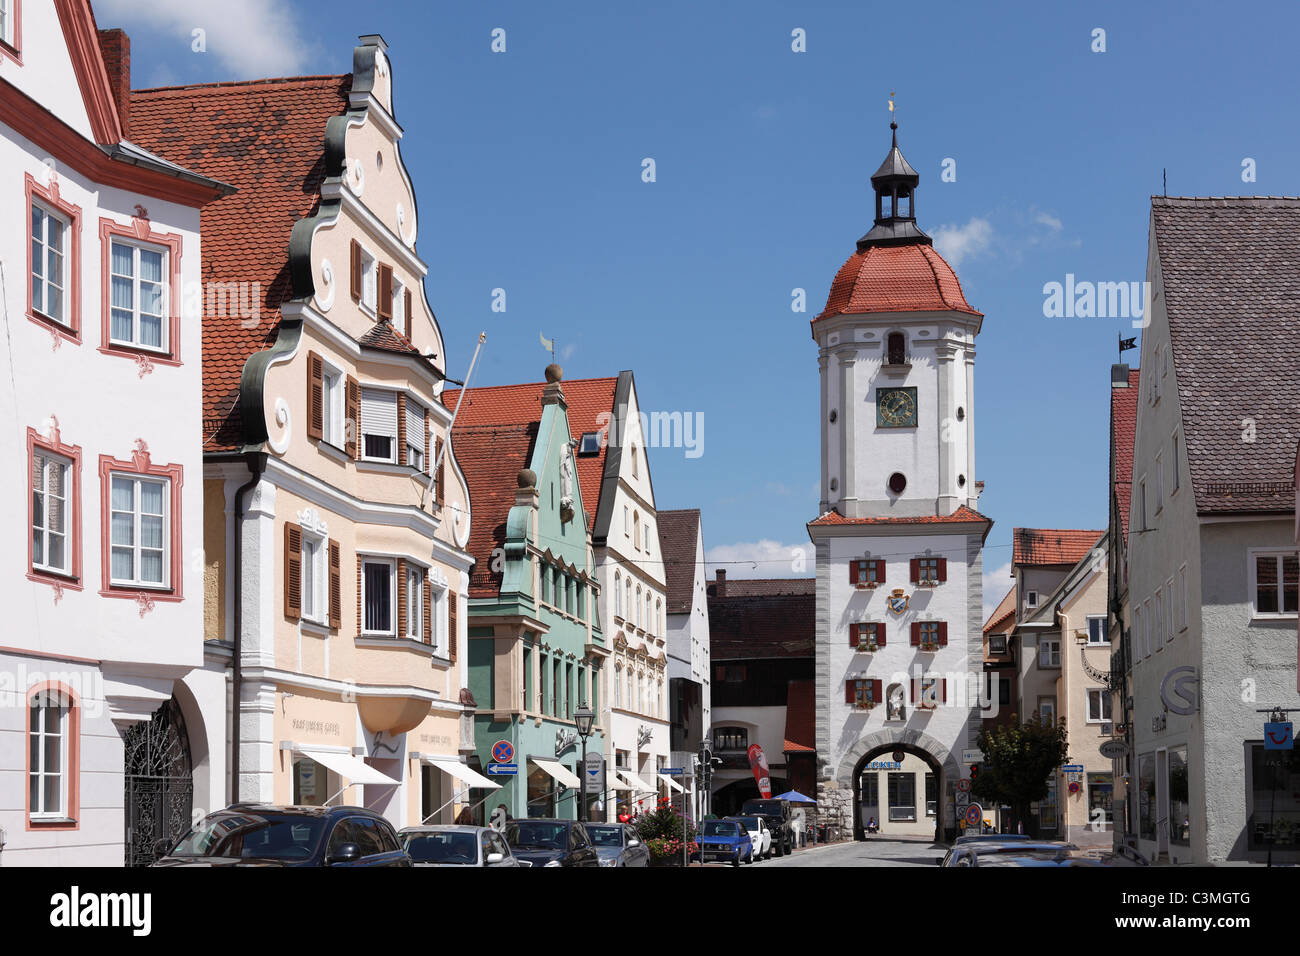 Germany, Bavaria, Swabia, View of Buildings Stock Photo